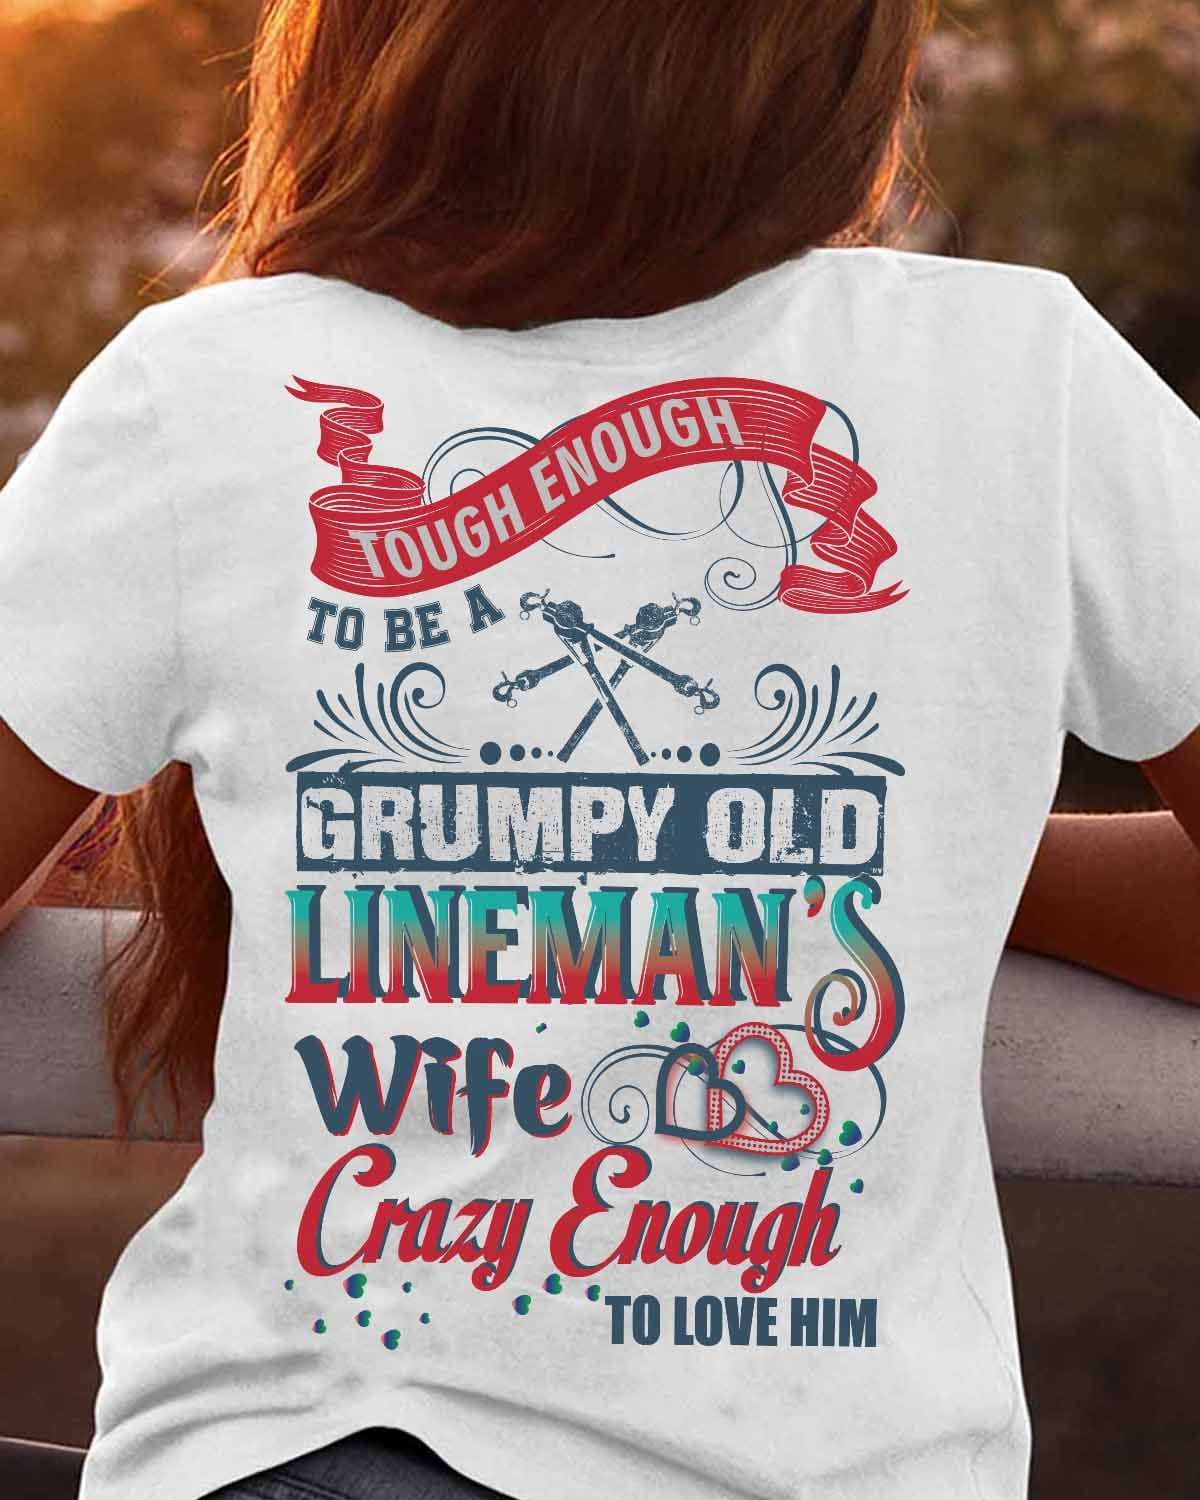 Tough enough to be a grumpy old lineman wife crazy enough to love him